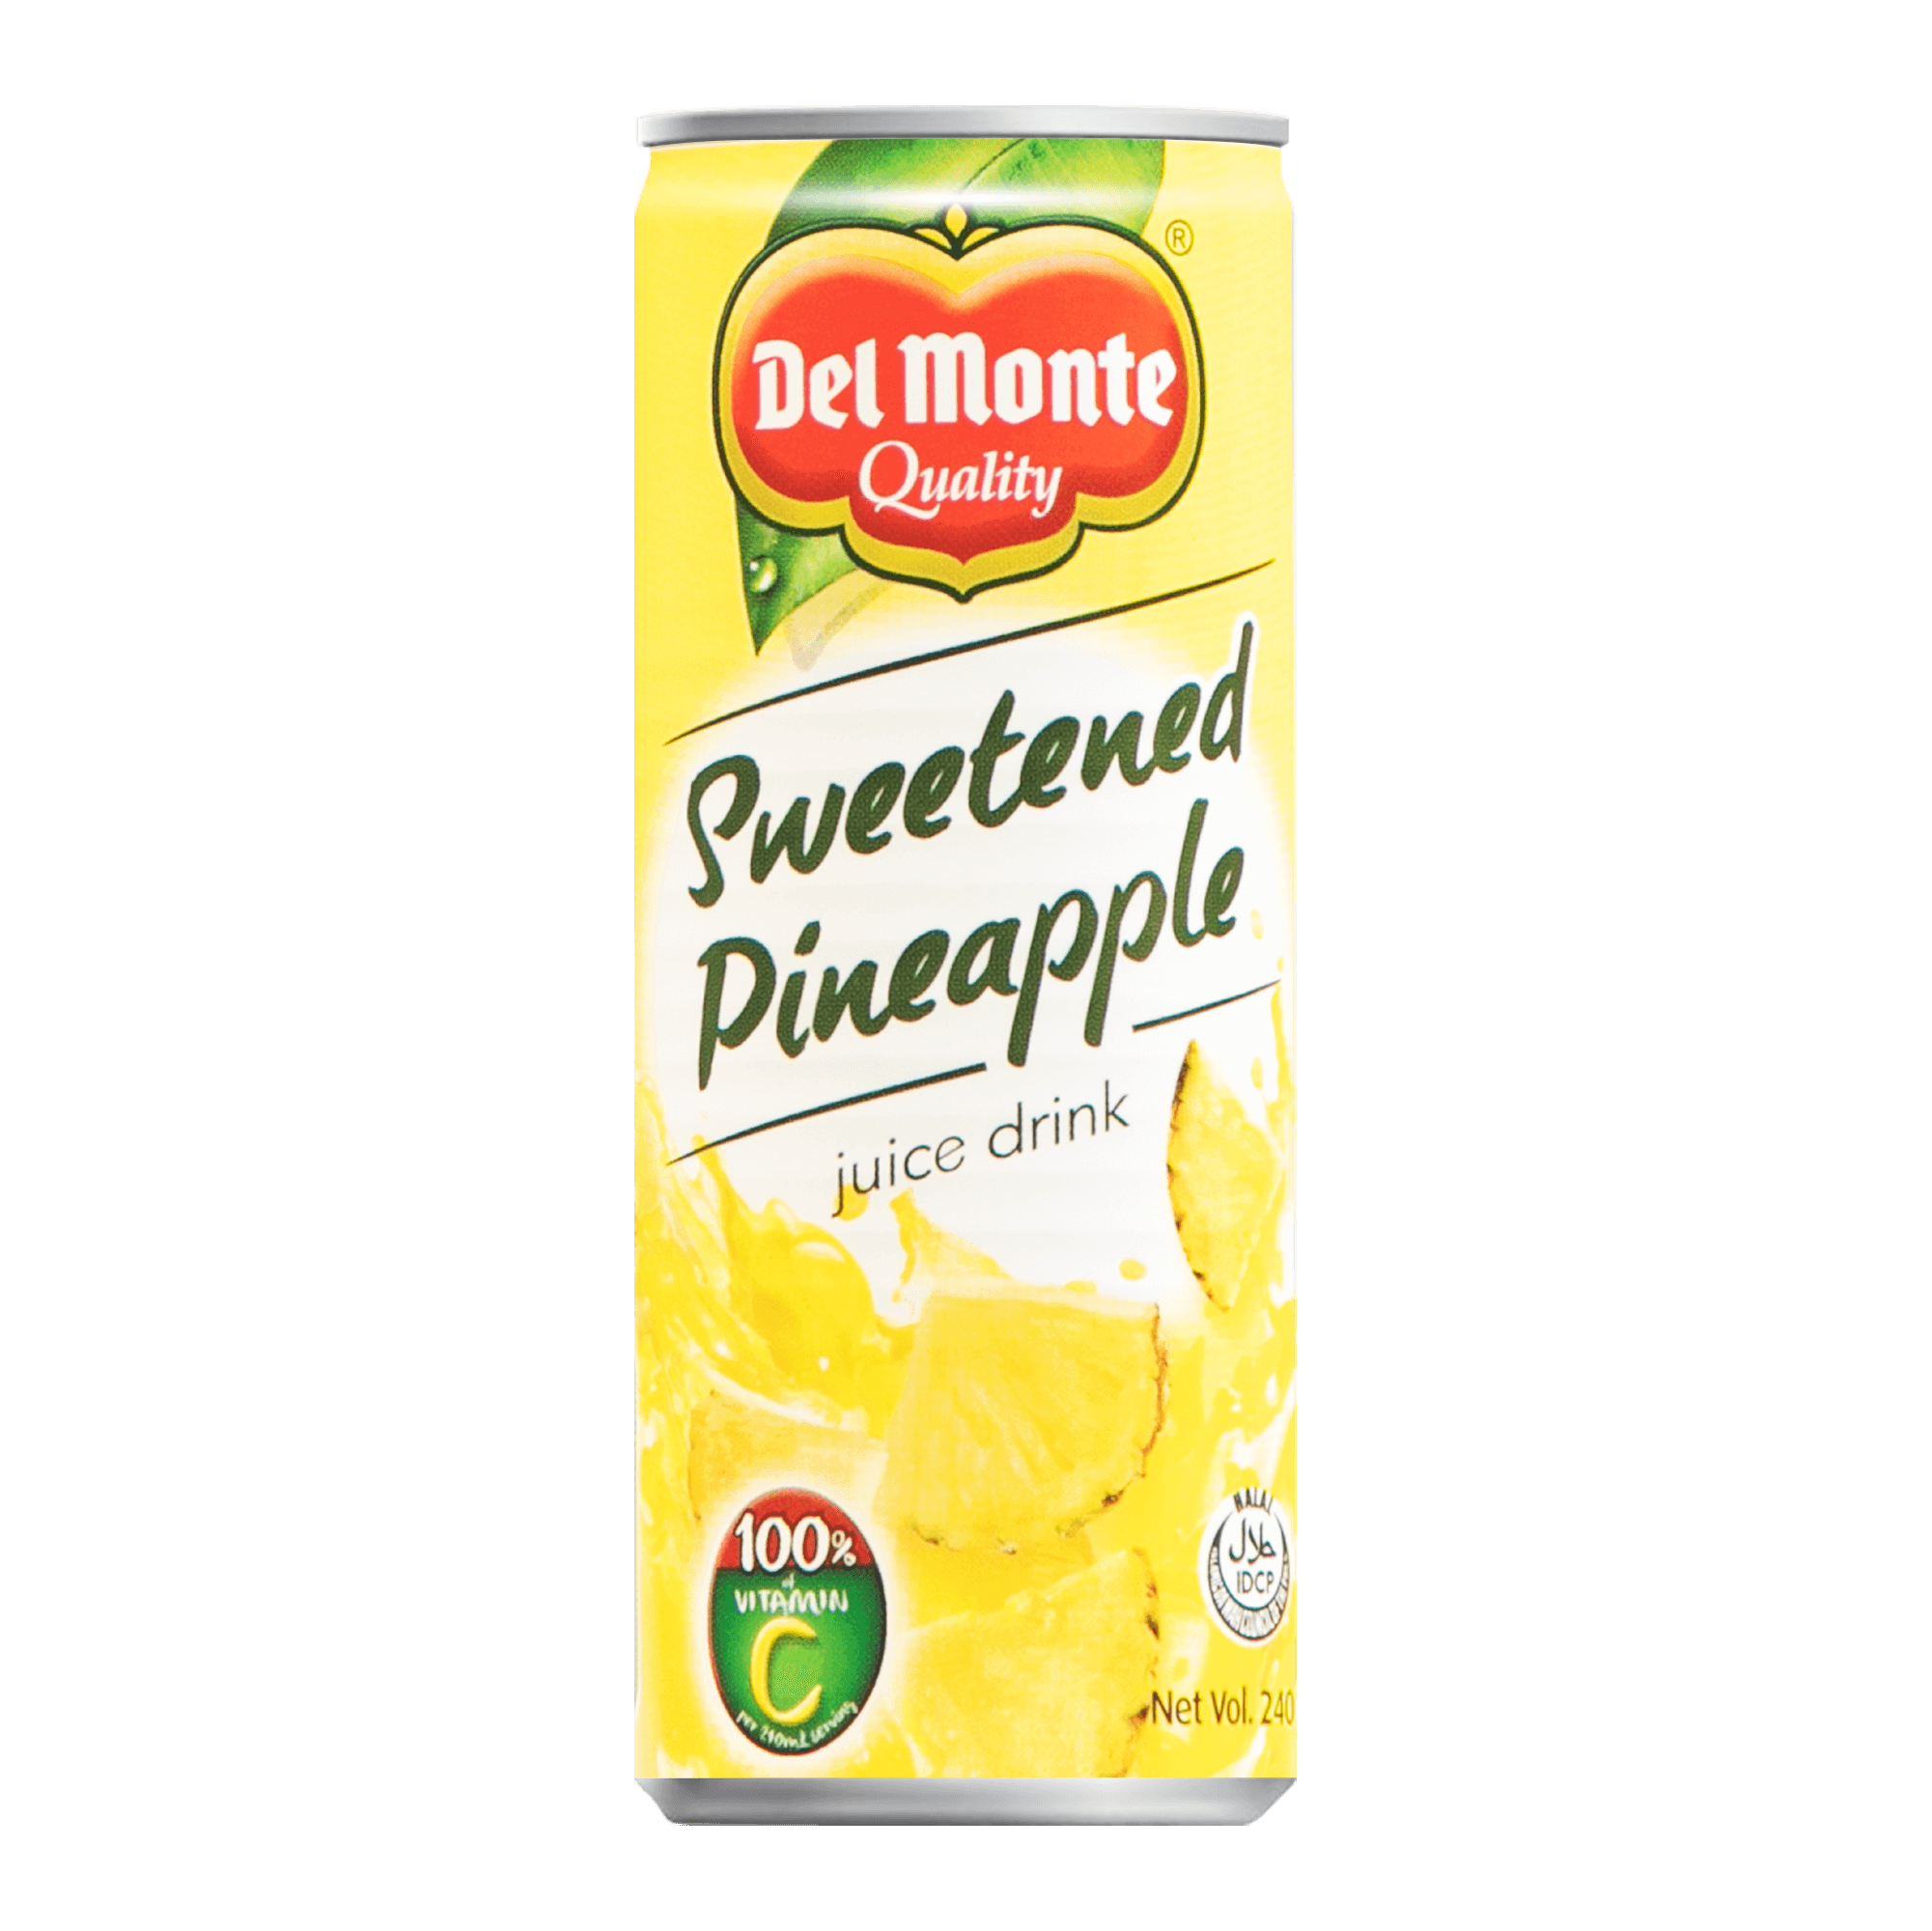 Del Monte Sweetened Pineapple Juice Drink